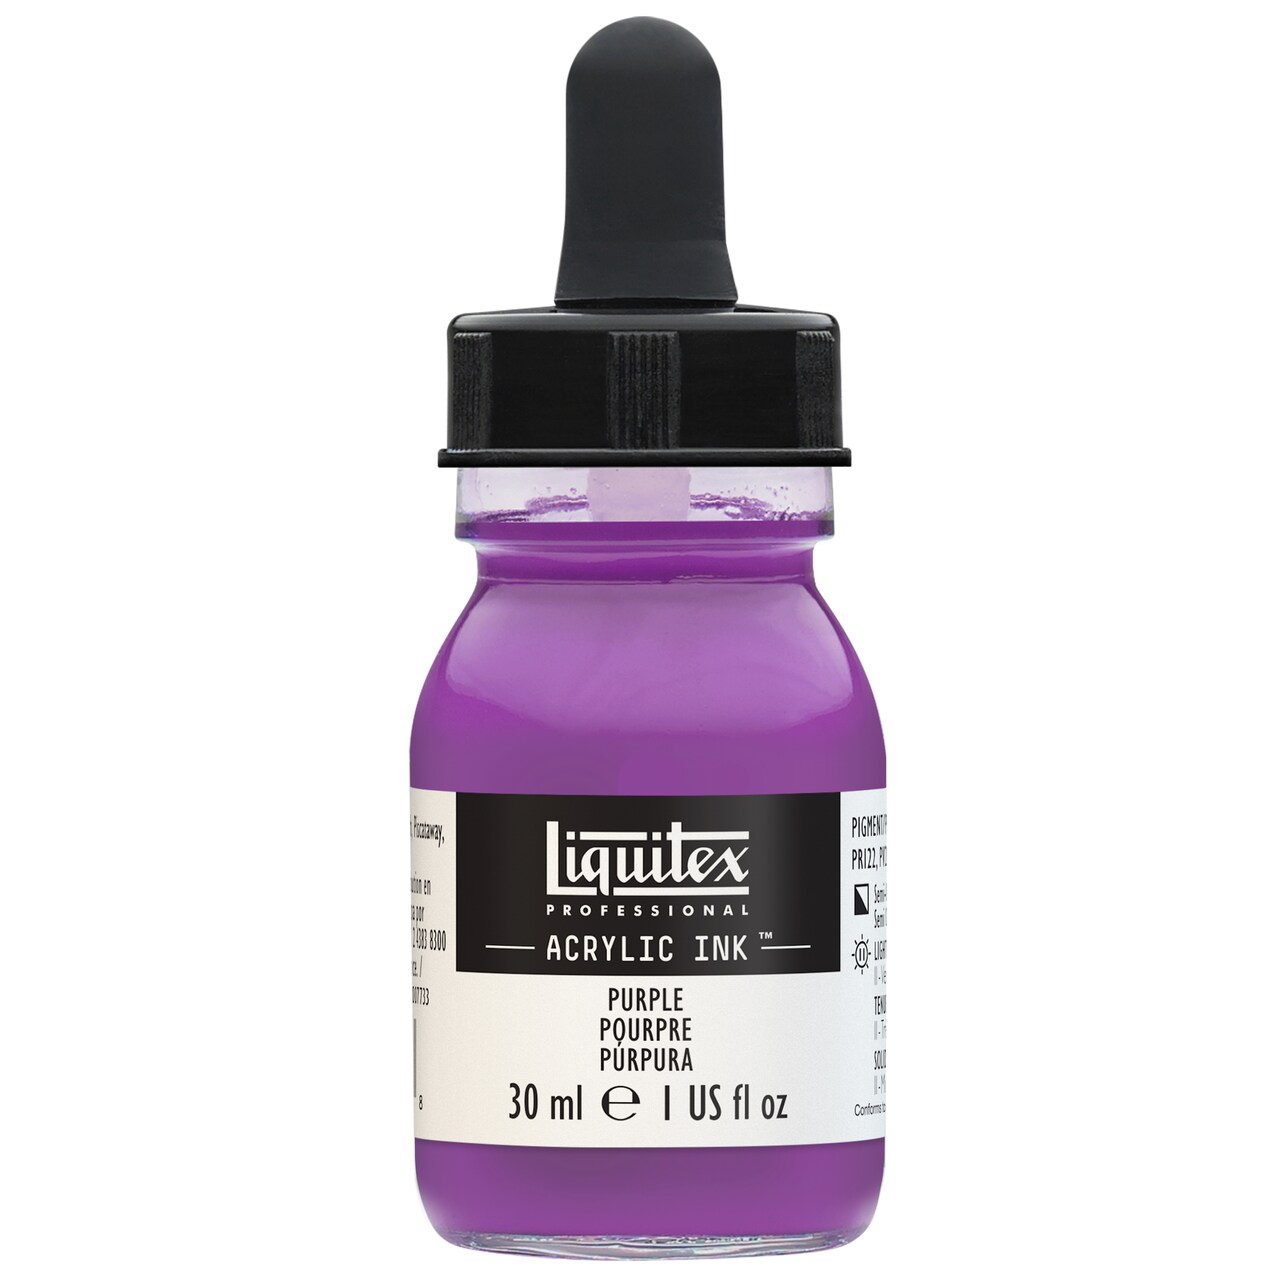 Liquitex Professional Acrylic Ink, 30Ml Jar, Purple